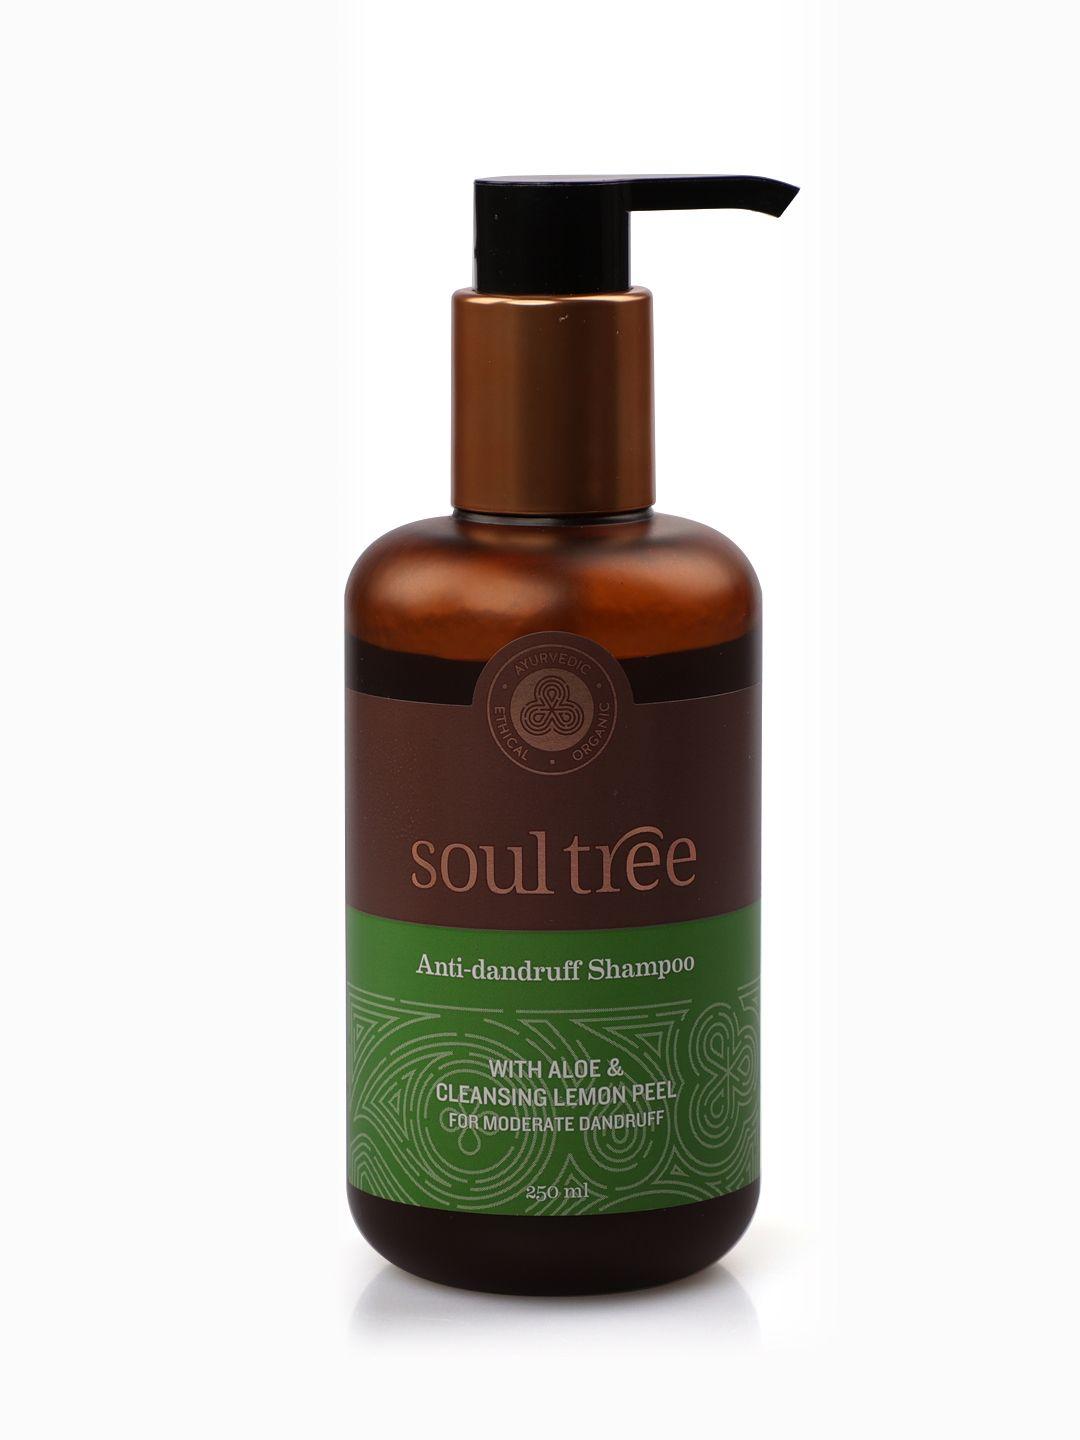 soultree anti-dandruff shampoo with aloe & cleansing lemon peel - 250ml